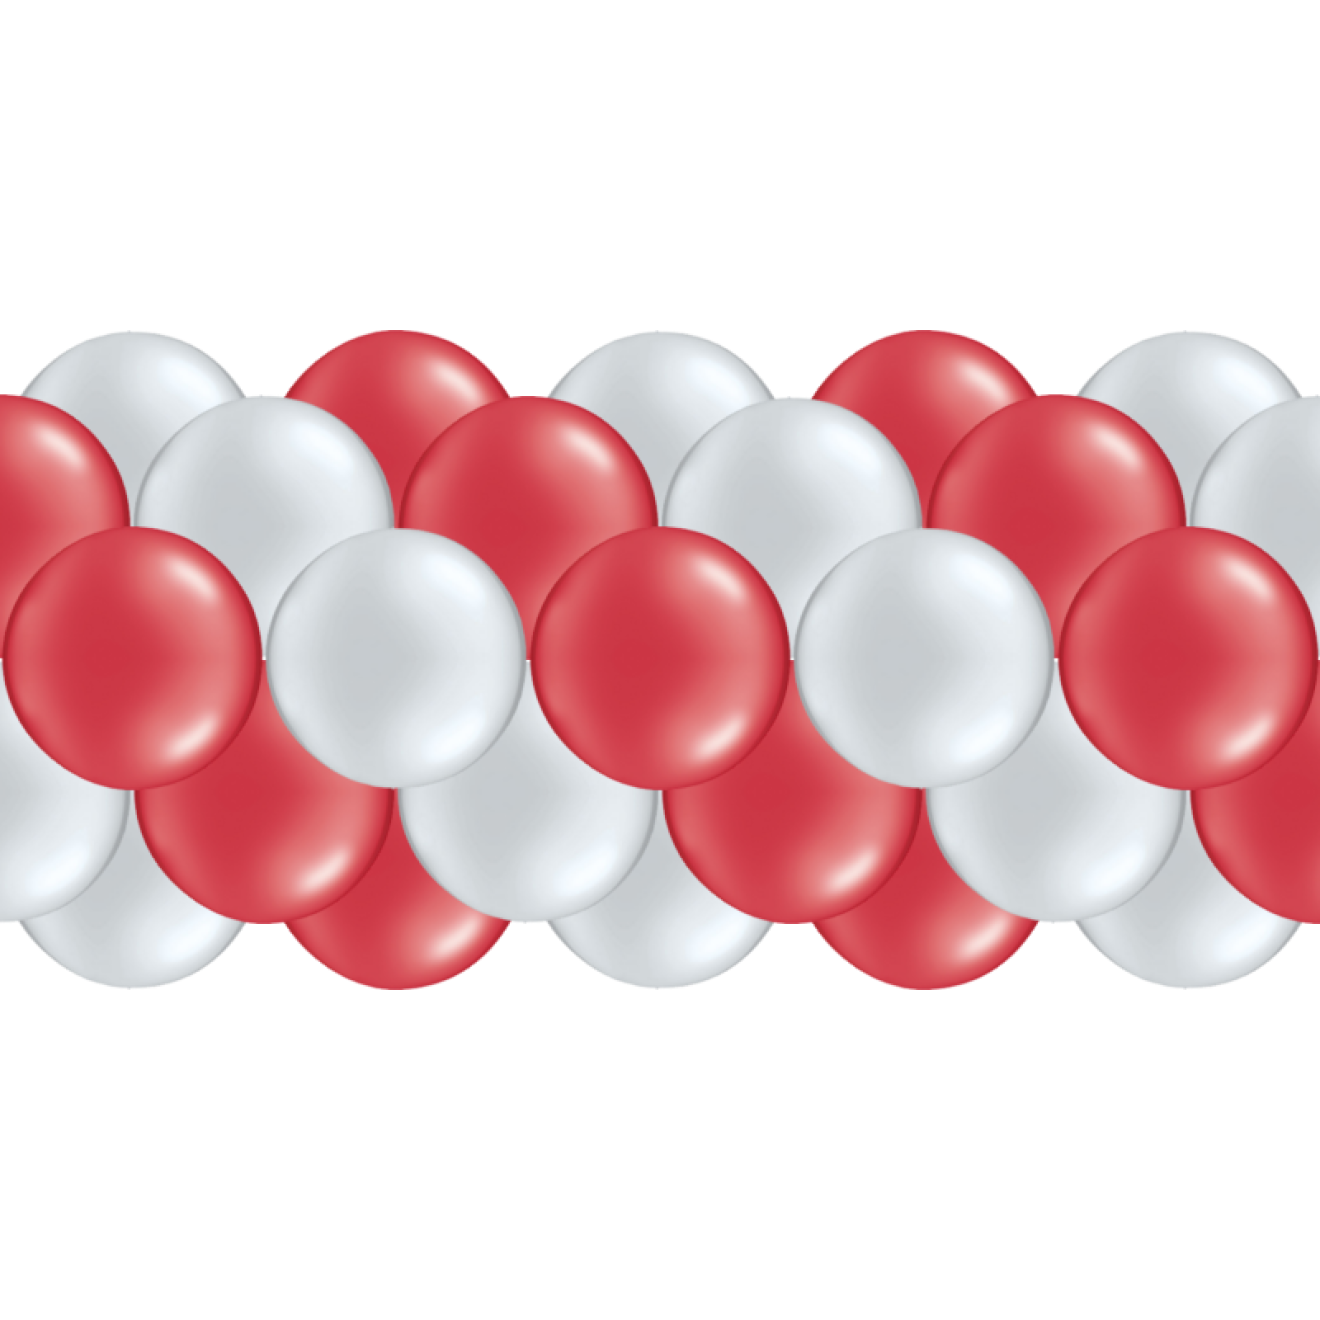 Luftballongirlanden-Set Silber & Rot (Metallic / Glänzend) ab 3 m